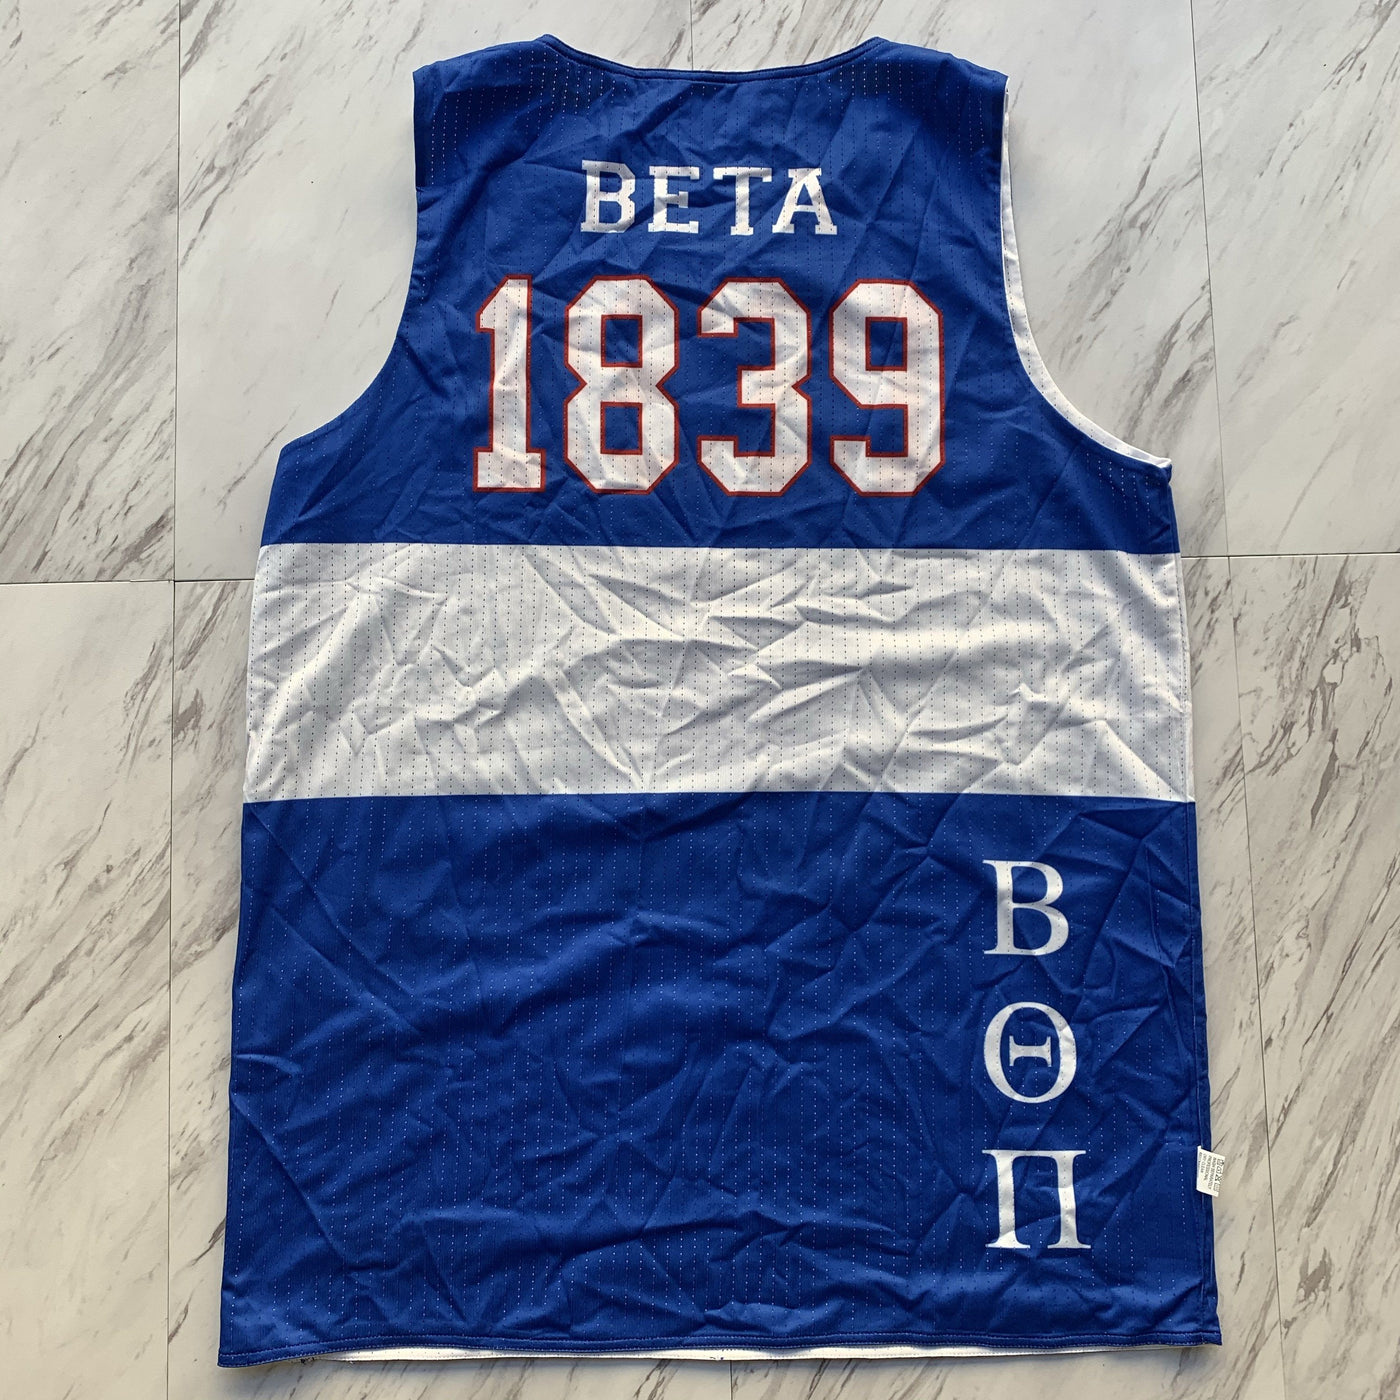 Beta Theta Pi white/blue reversible basketball jersey